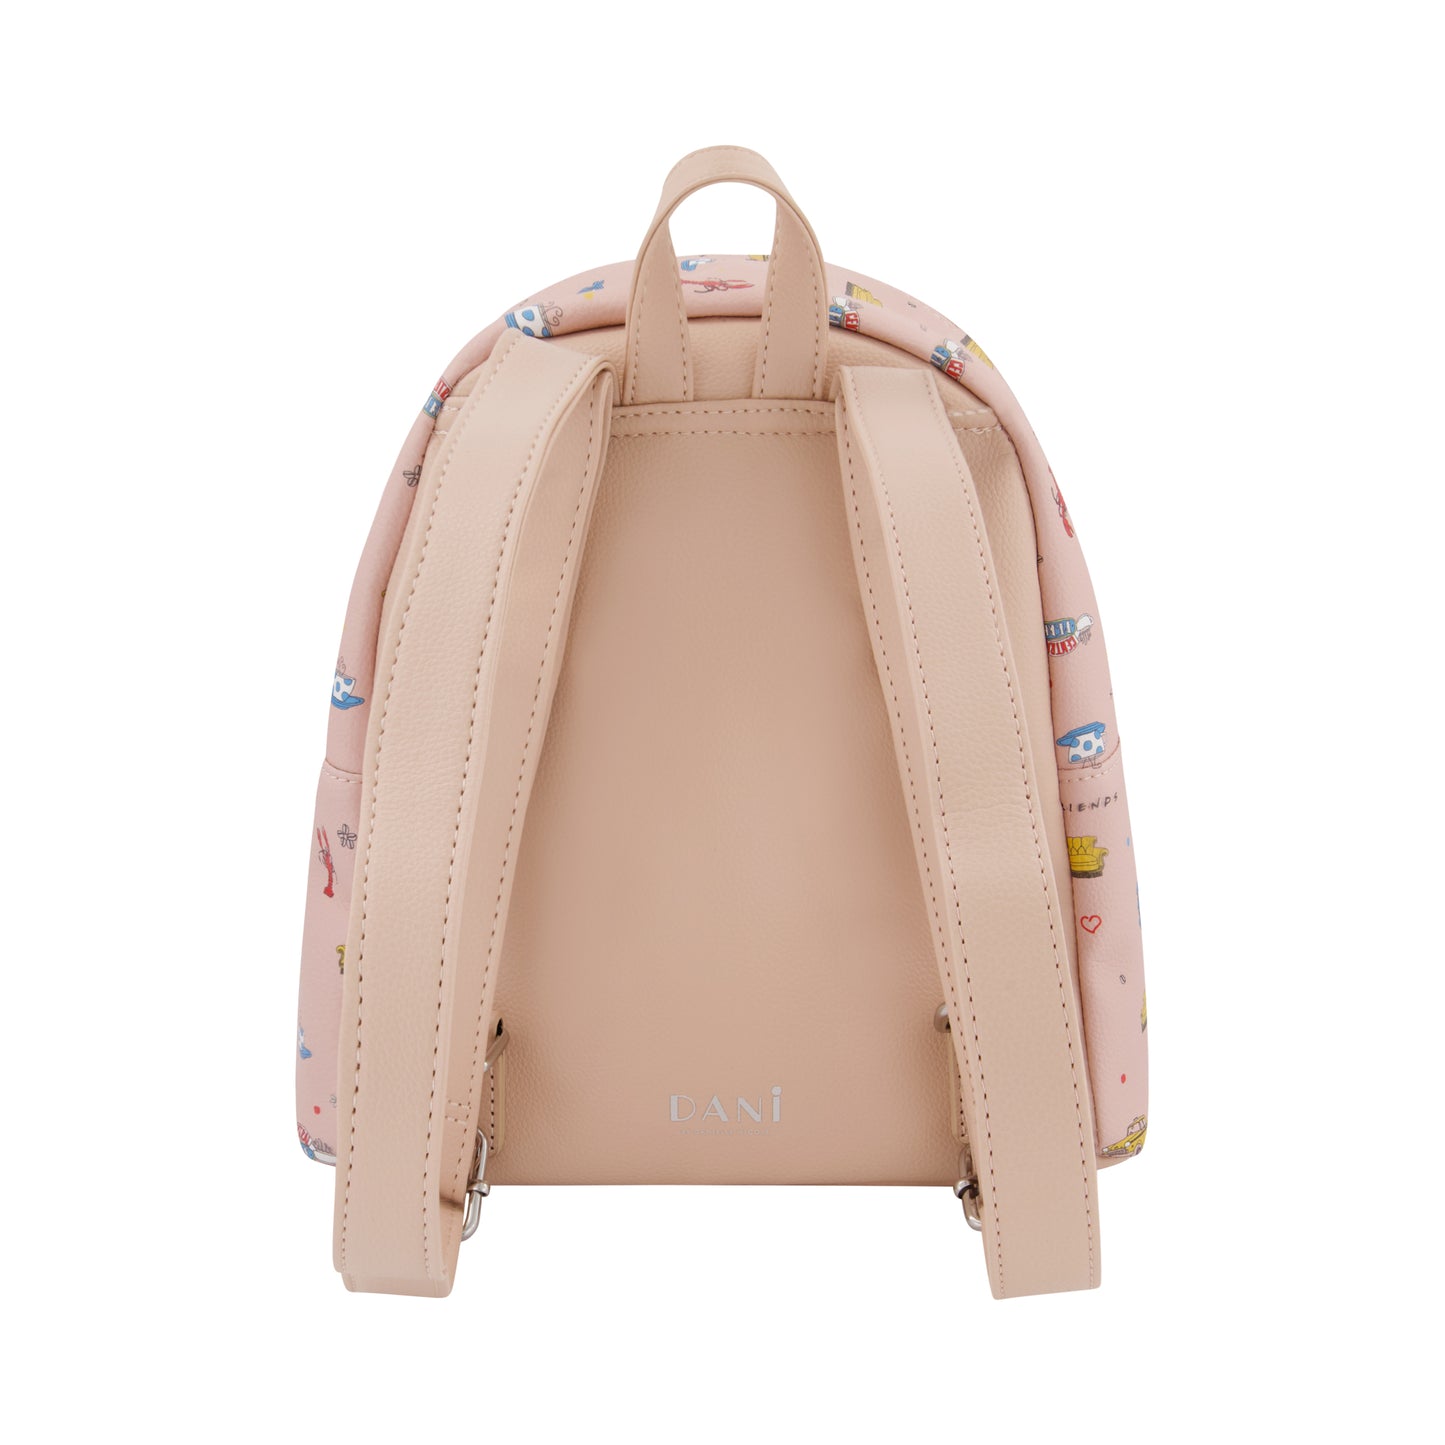 Friends Central Perk Mini Backpack, Small Bookbag, Pink